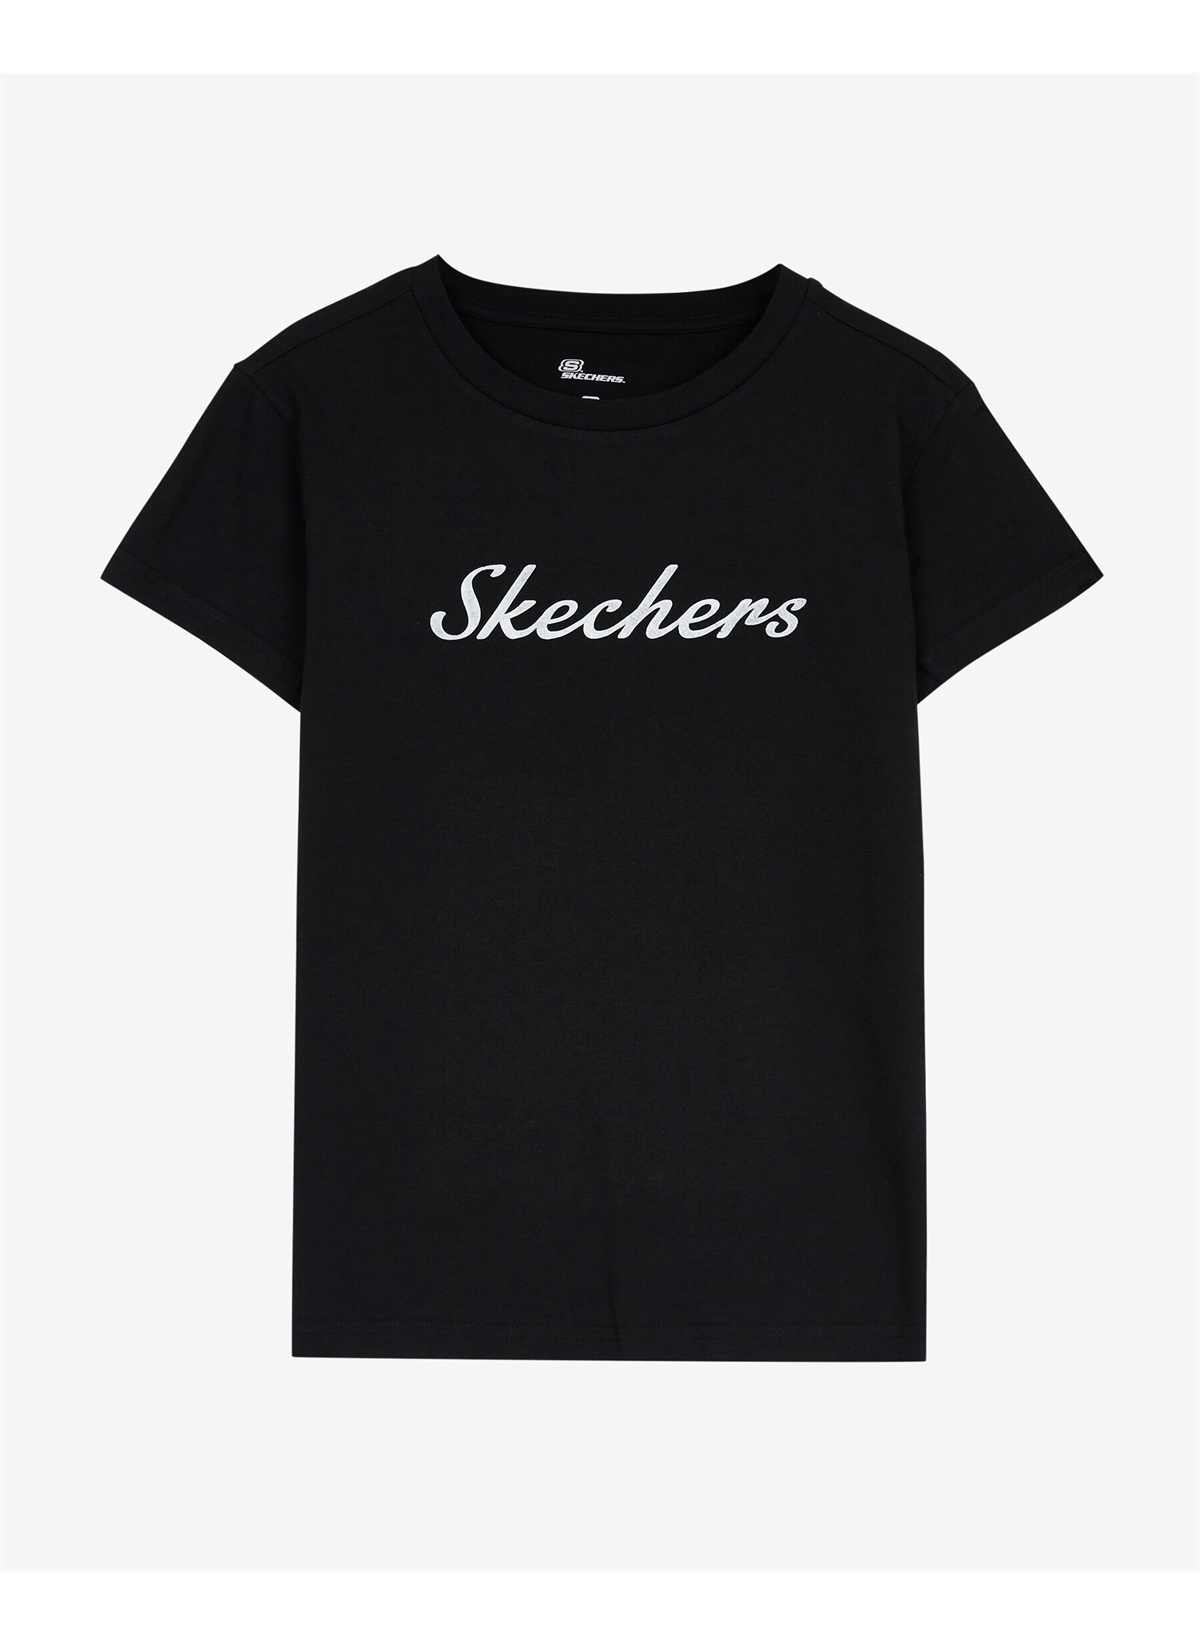 Skechers Graphic Erkek Siyah Tişört (S221180-001)